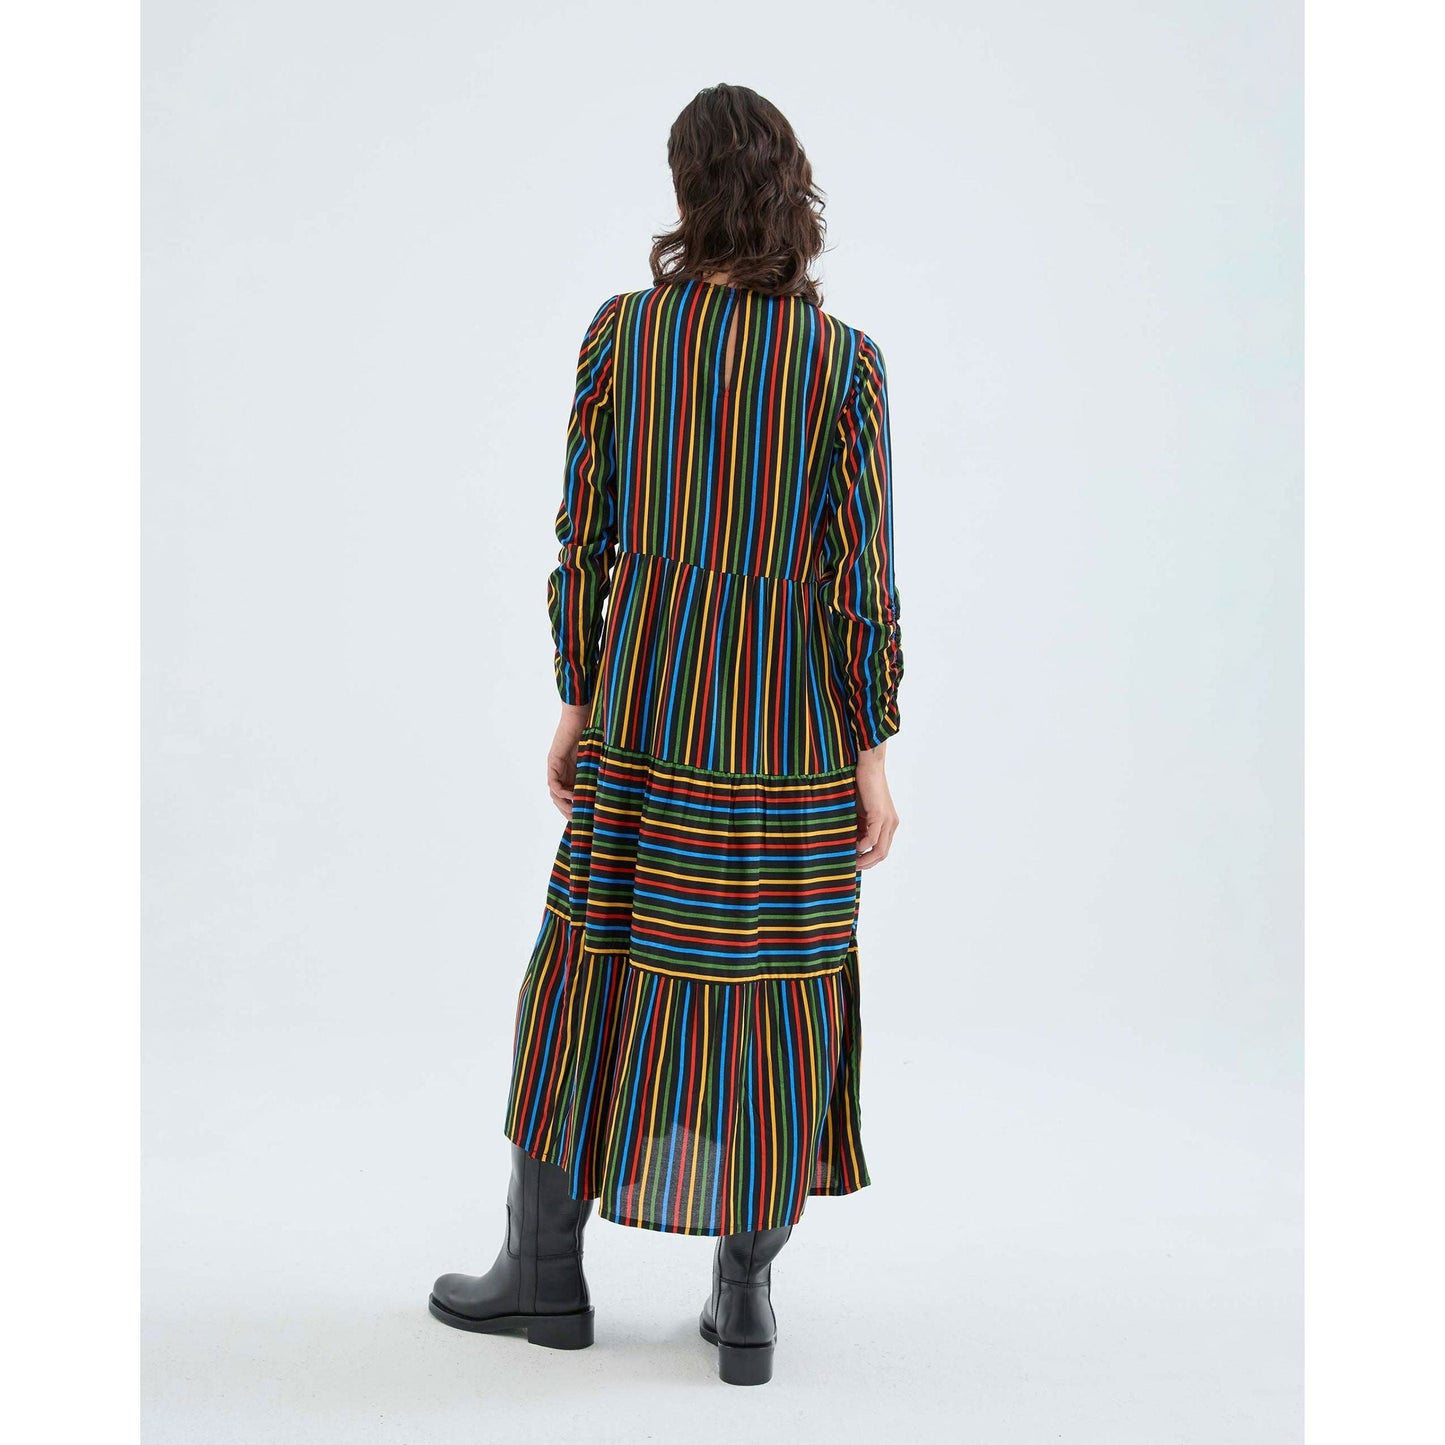 Compania Fantastica - Midi dress with long sleeves and multicolor stripe print